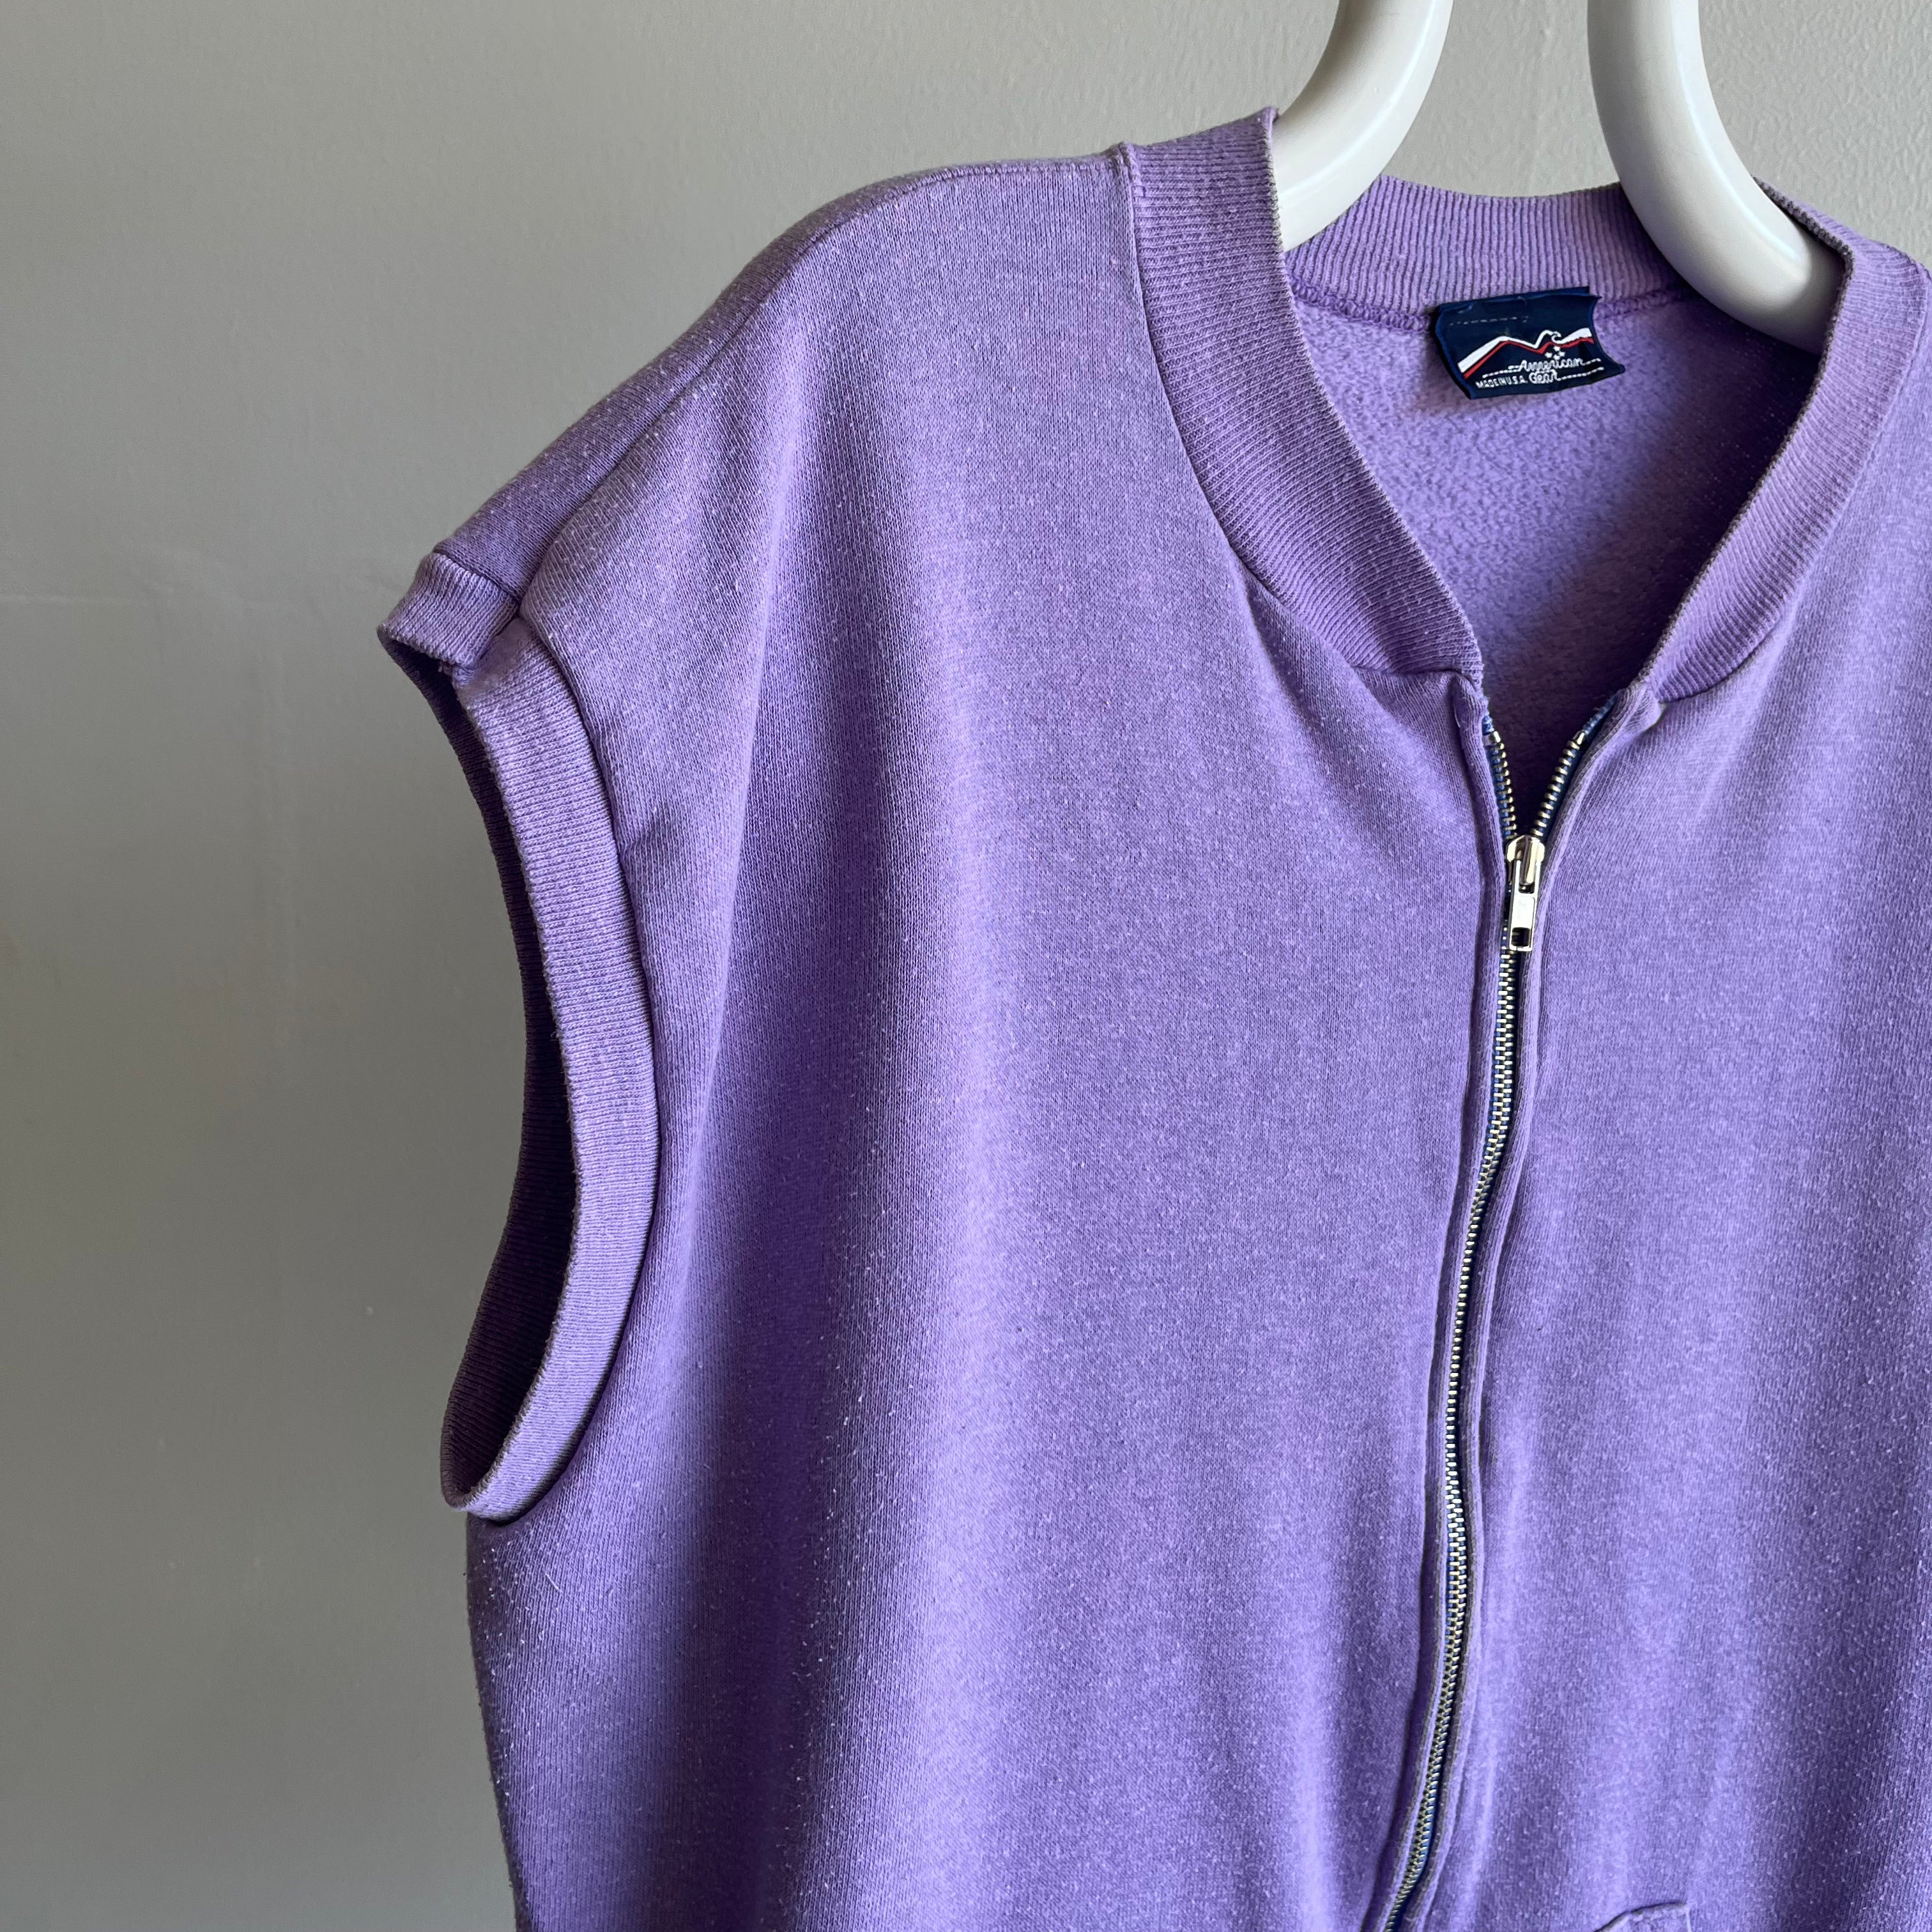 1980s Lilac Zip Up Oversized Warm Up Vest